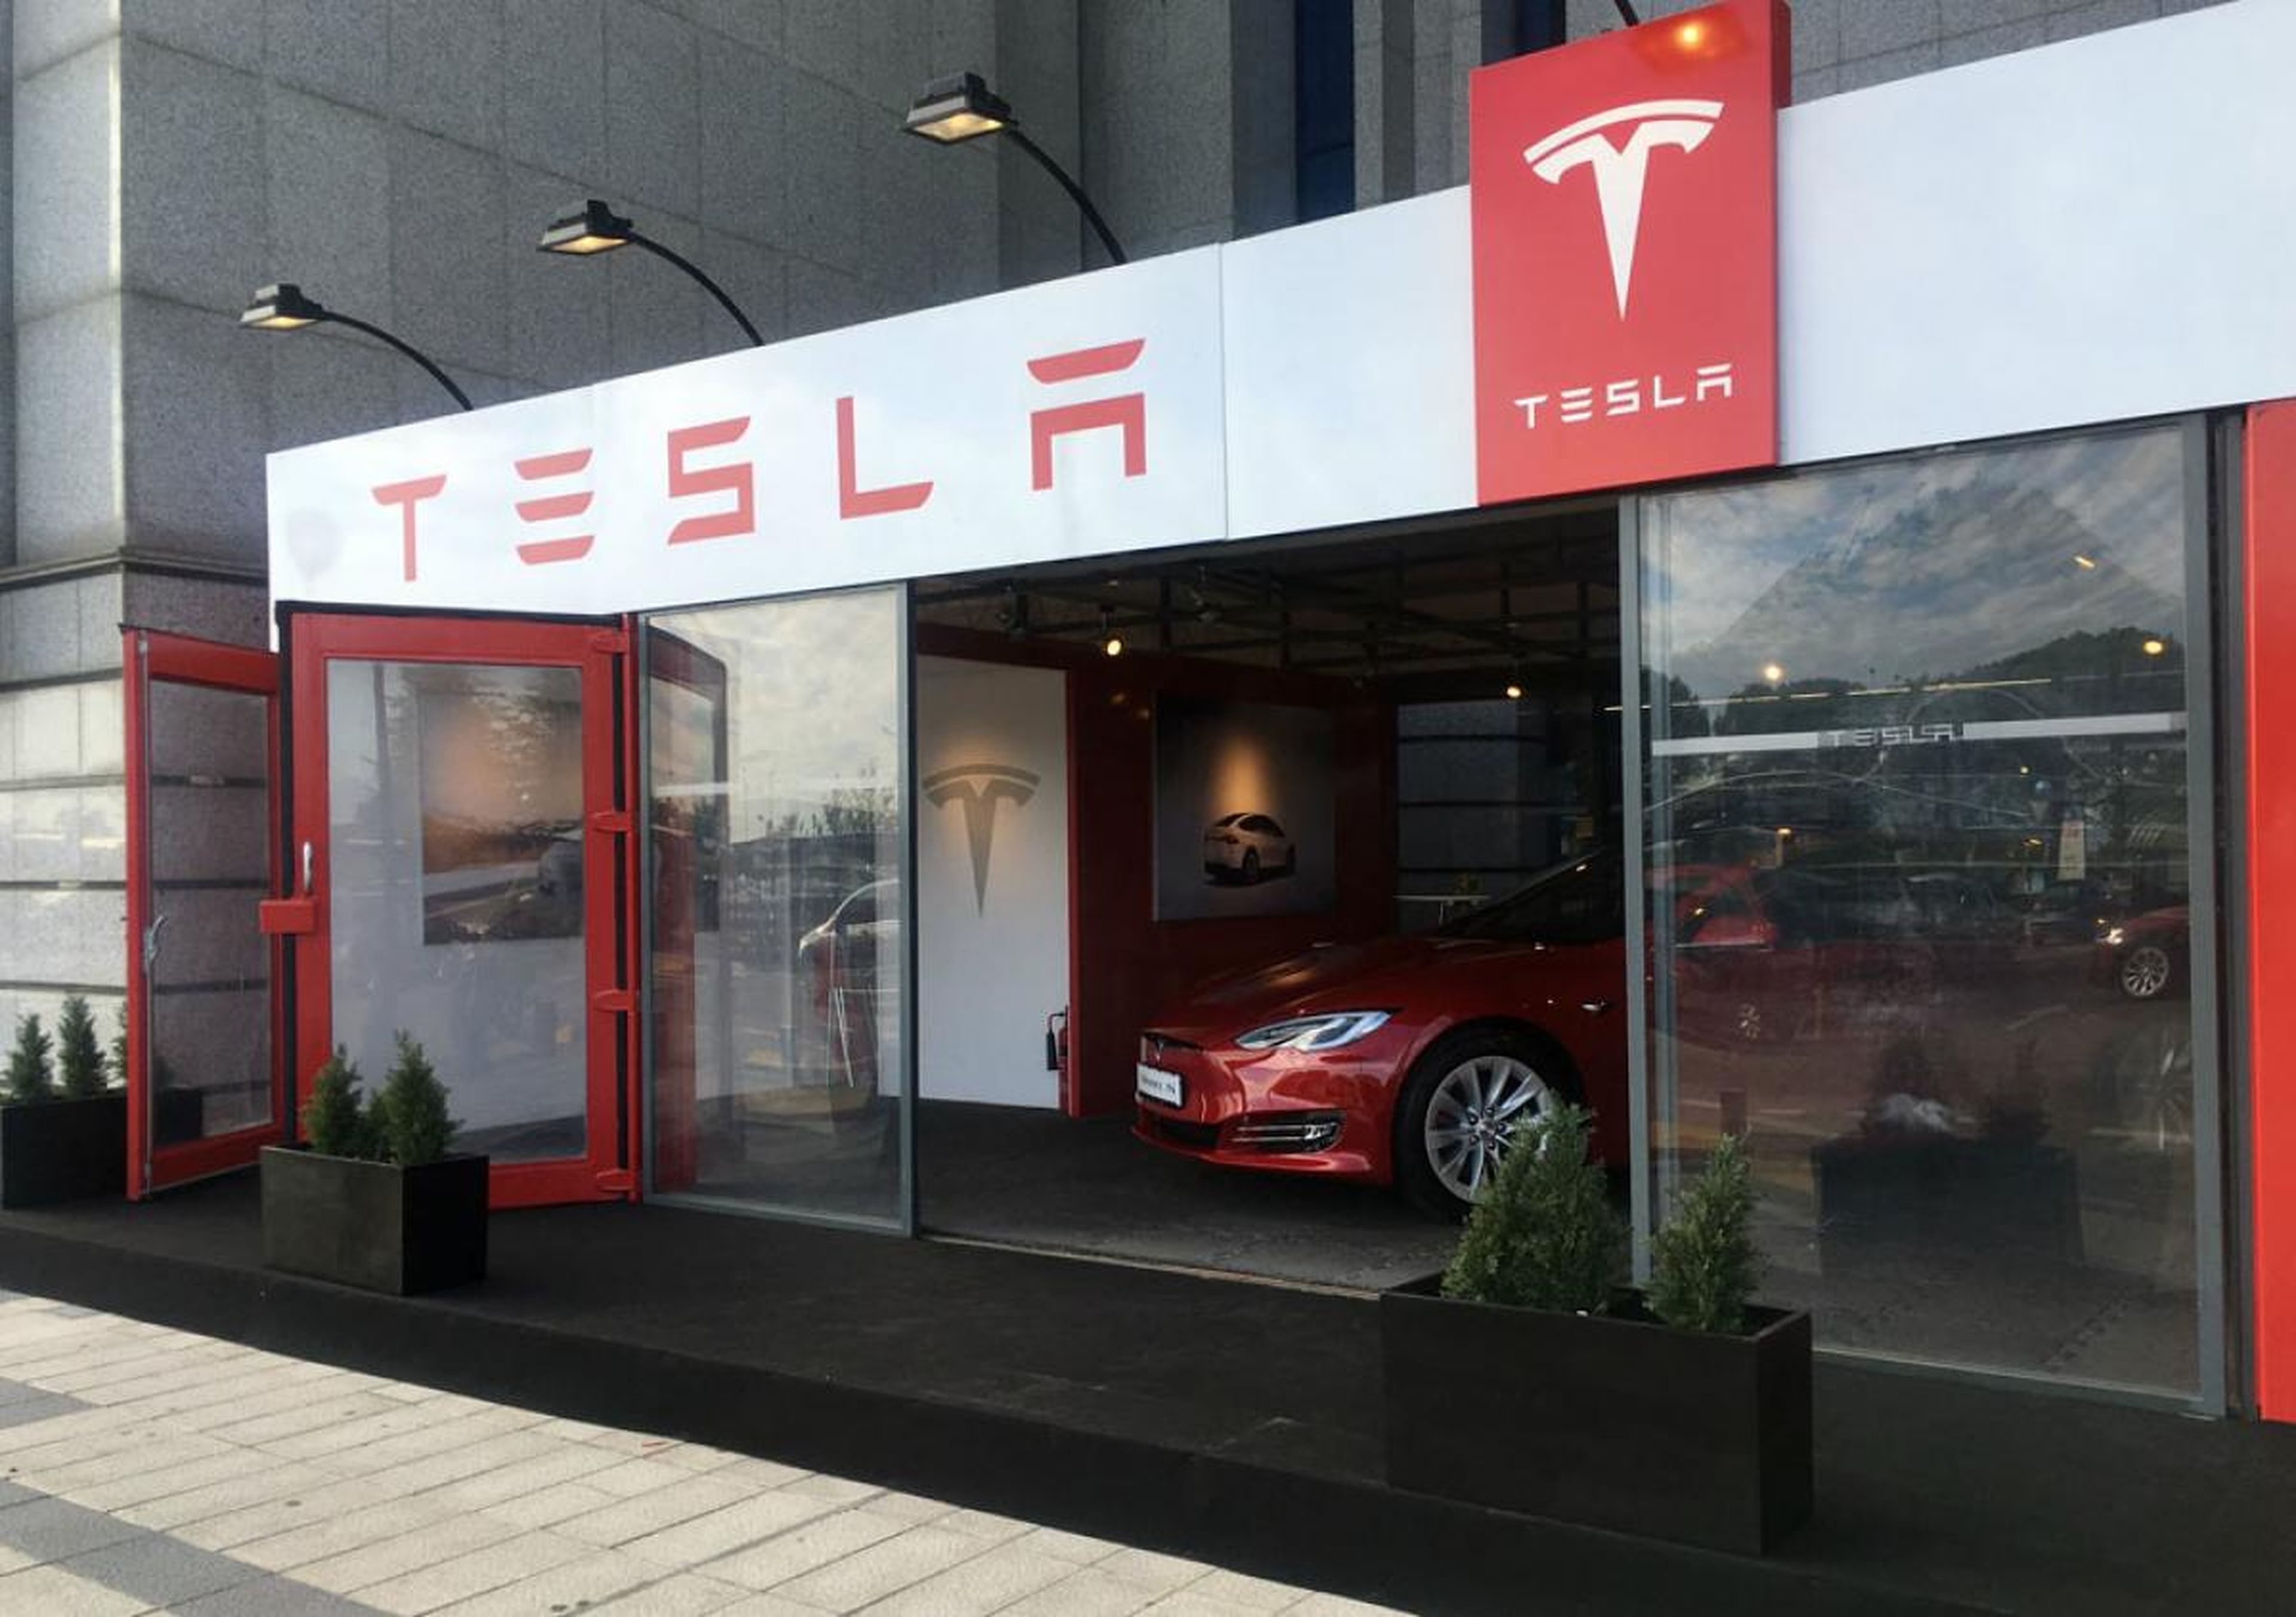 Tienda Tesla en Madrid